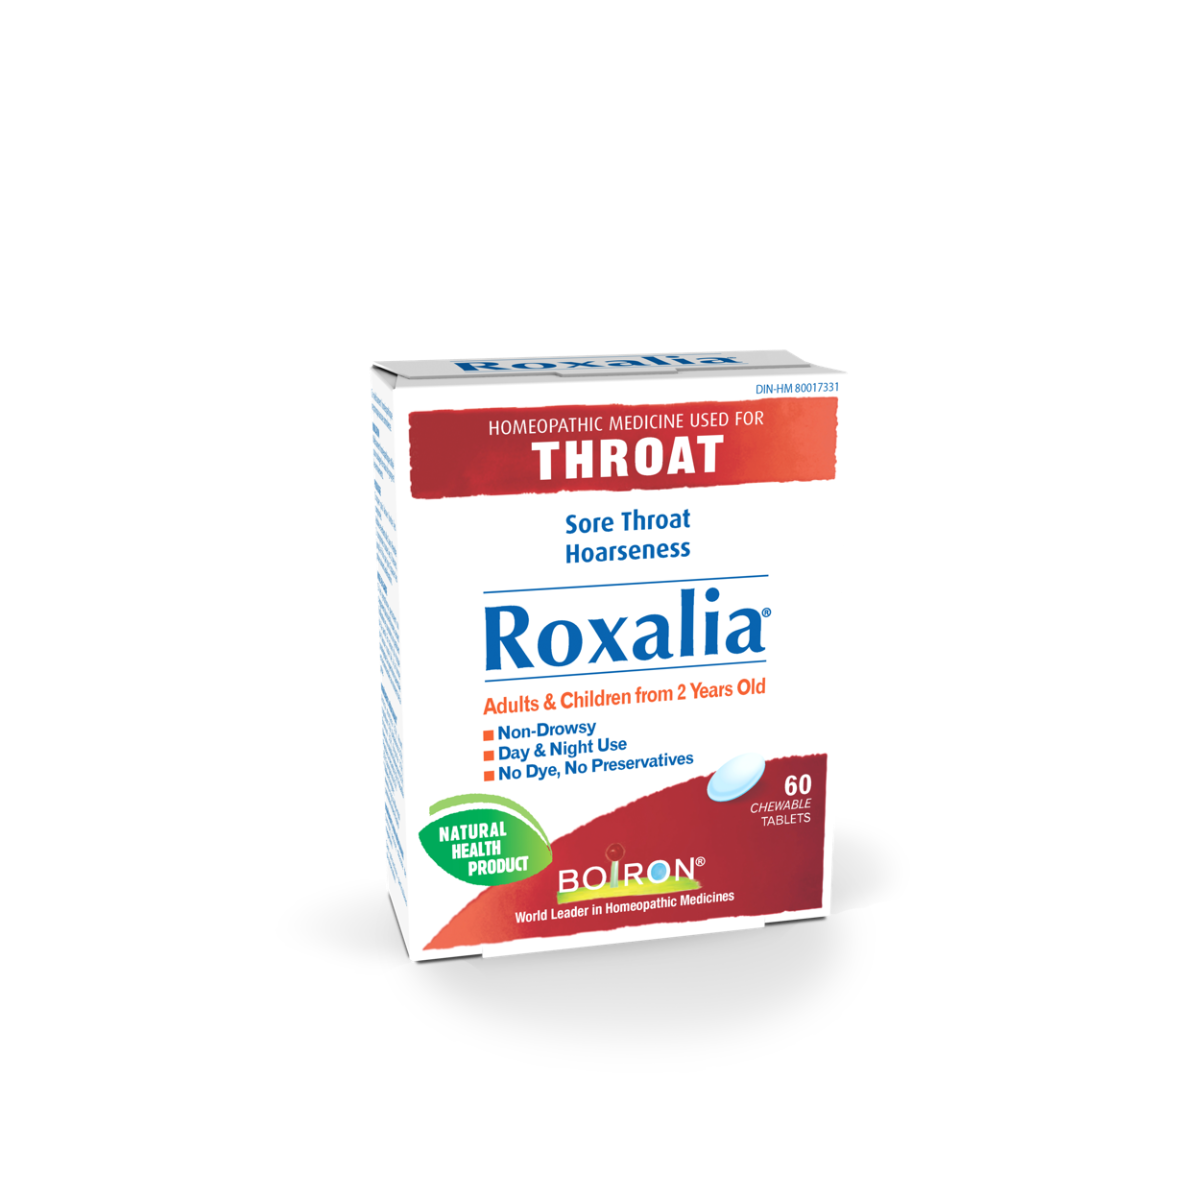 Boiron Roxalia 60 Tablets - Sore Throat, Hoarseness